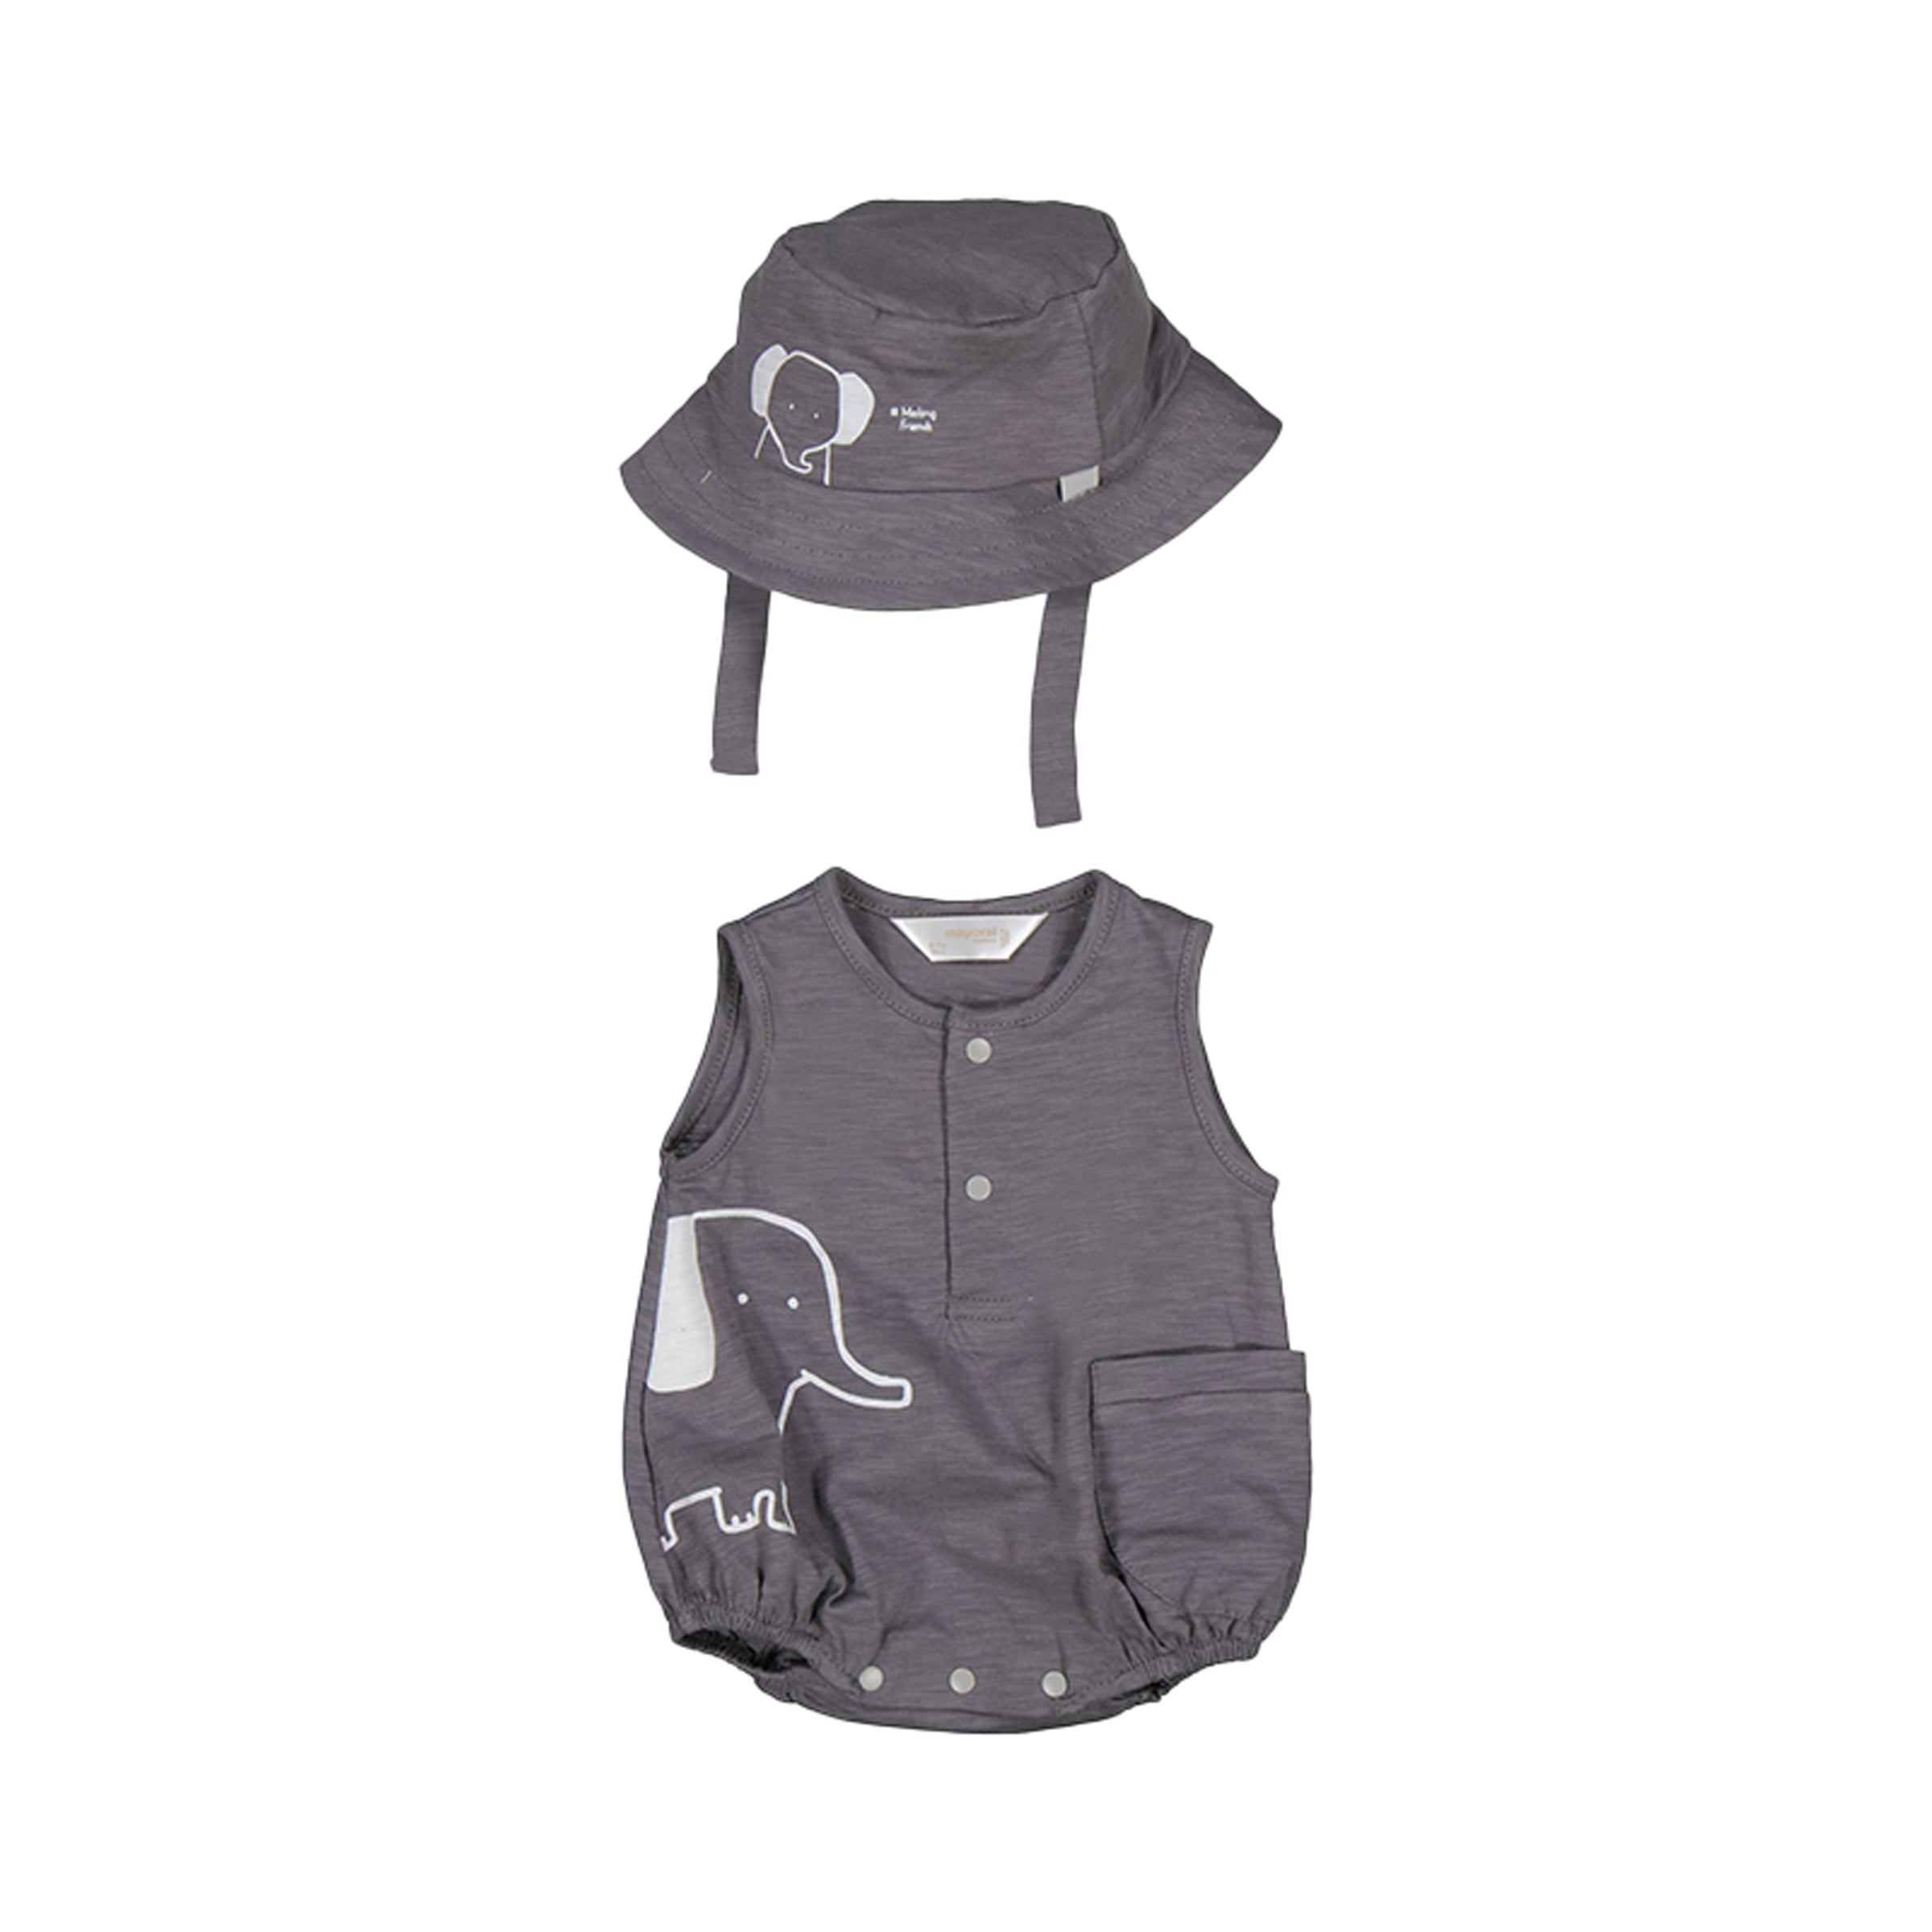 Gray Elephant Graphic Babysuit & Hat - kids atelier